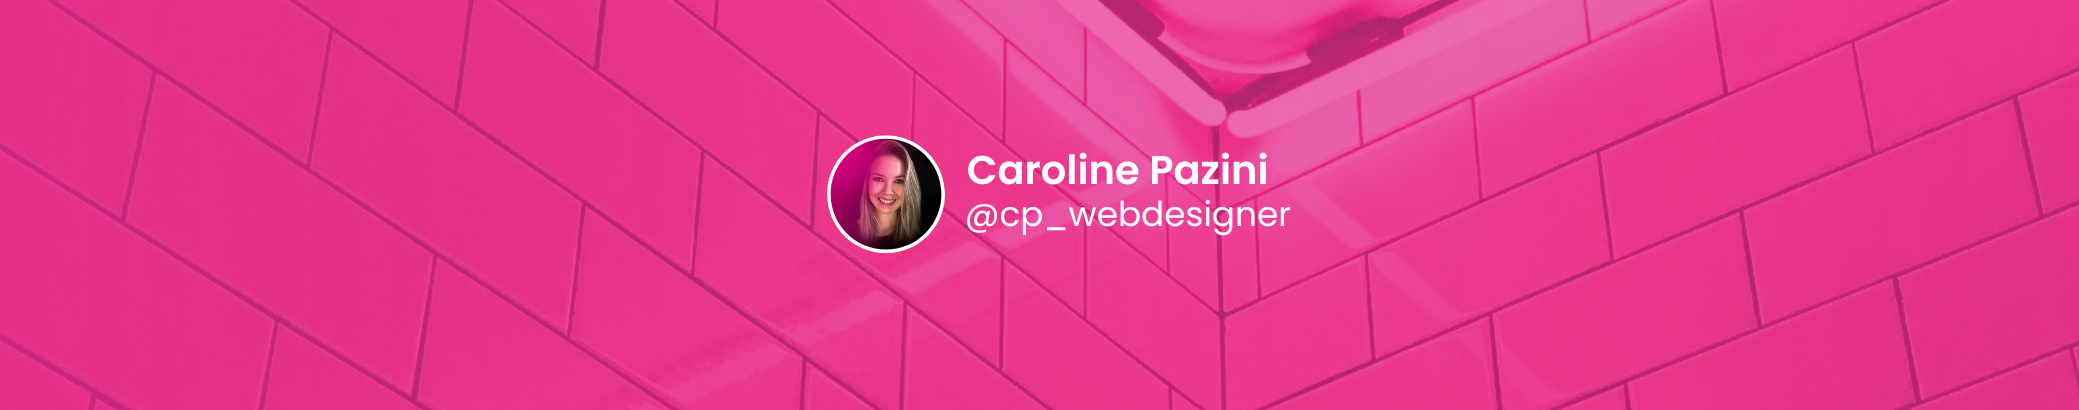 Caroline Pazini's profile banner